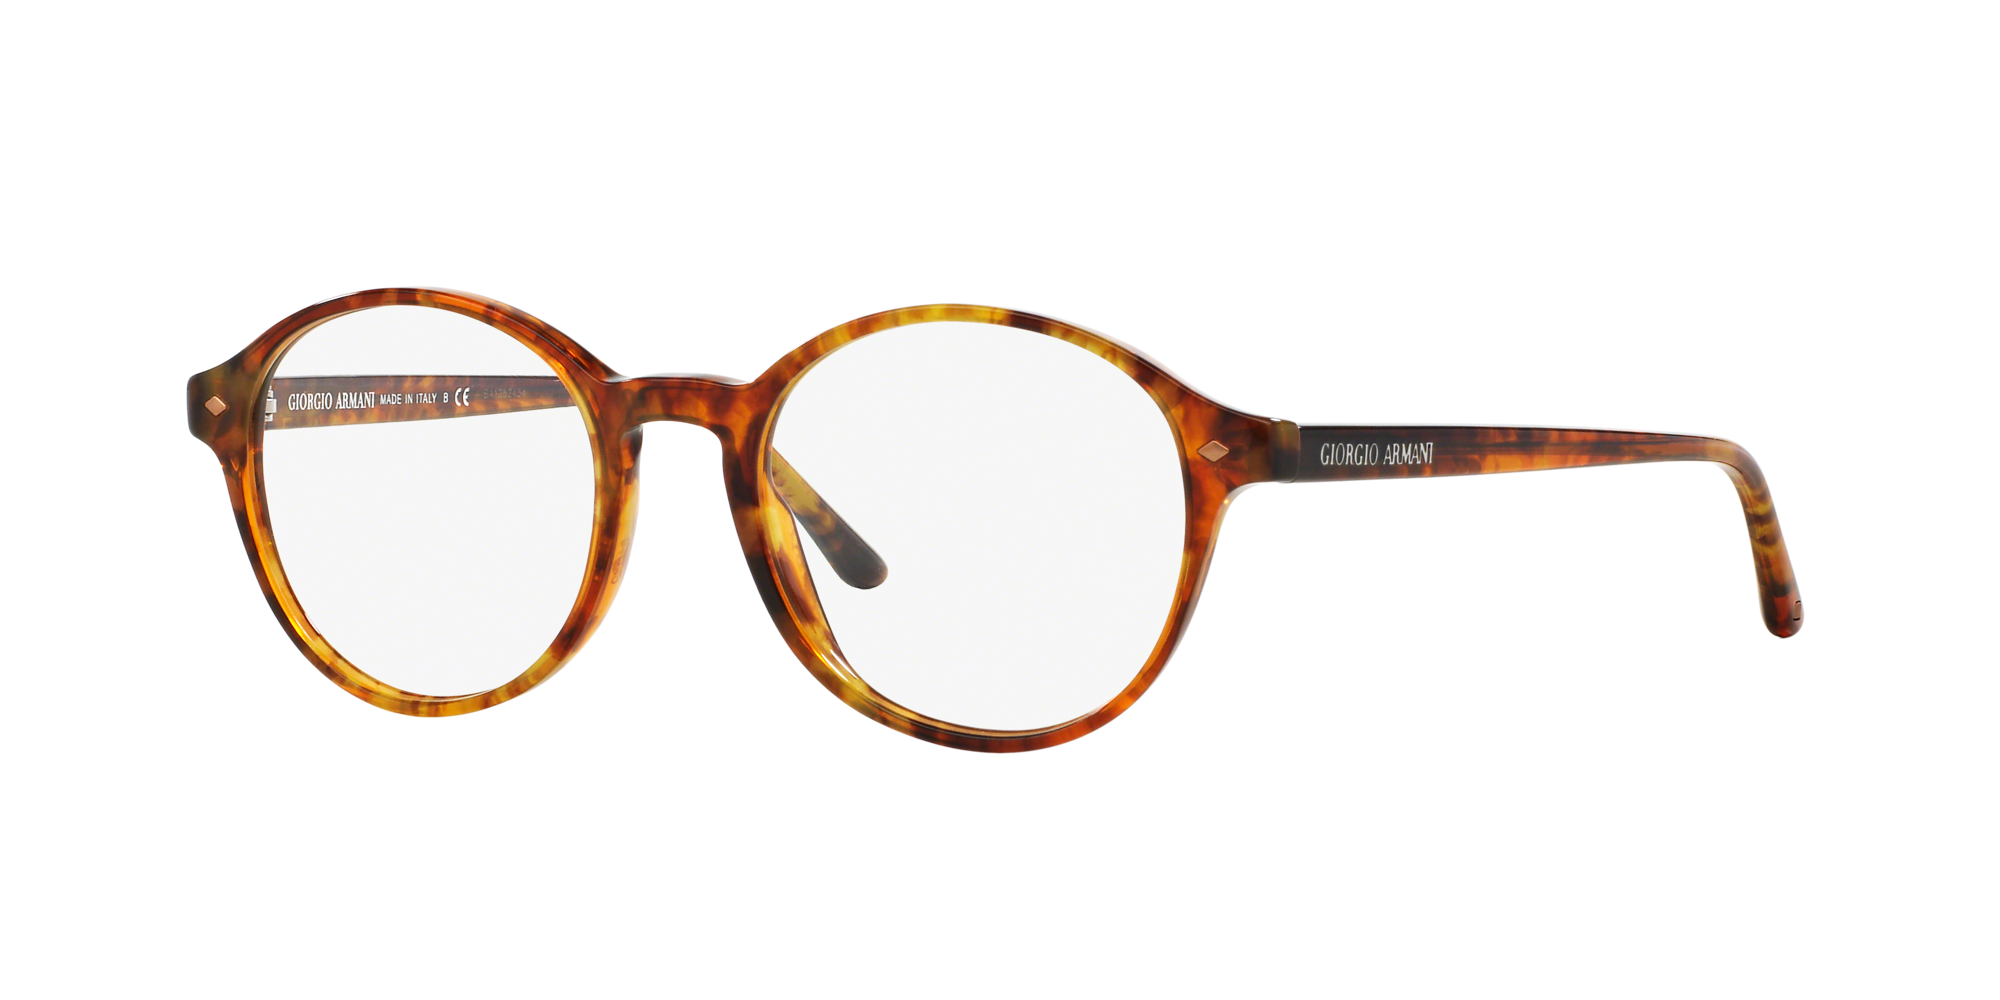 giorgio armani round glasses frames